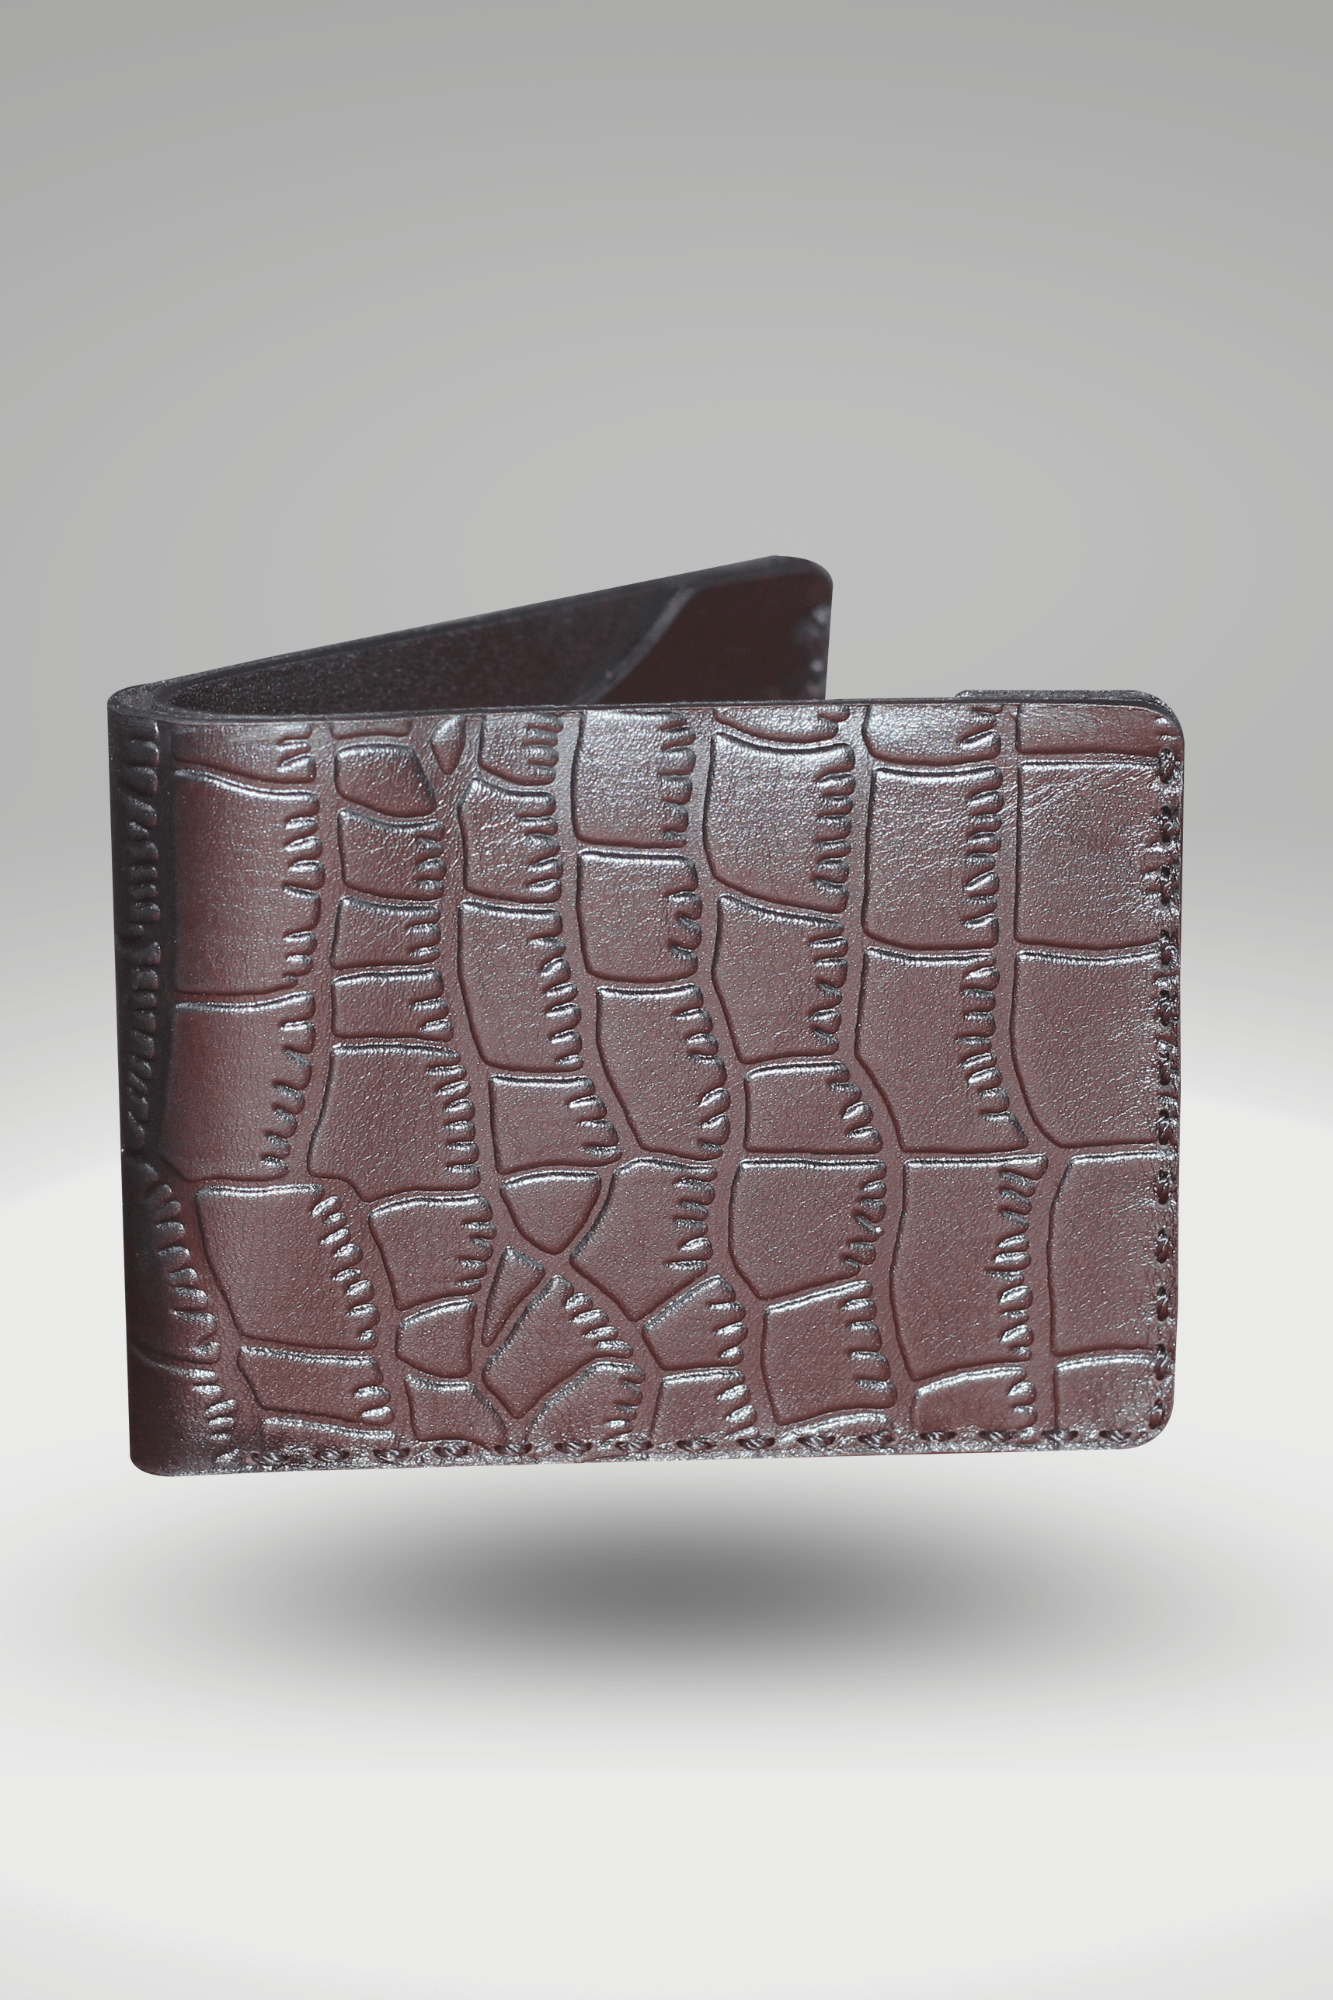 Gator leather Louis Vuitton wallet